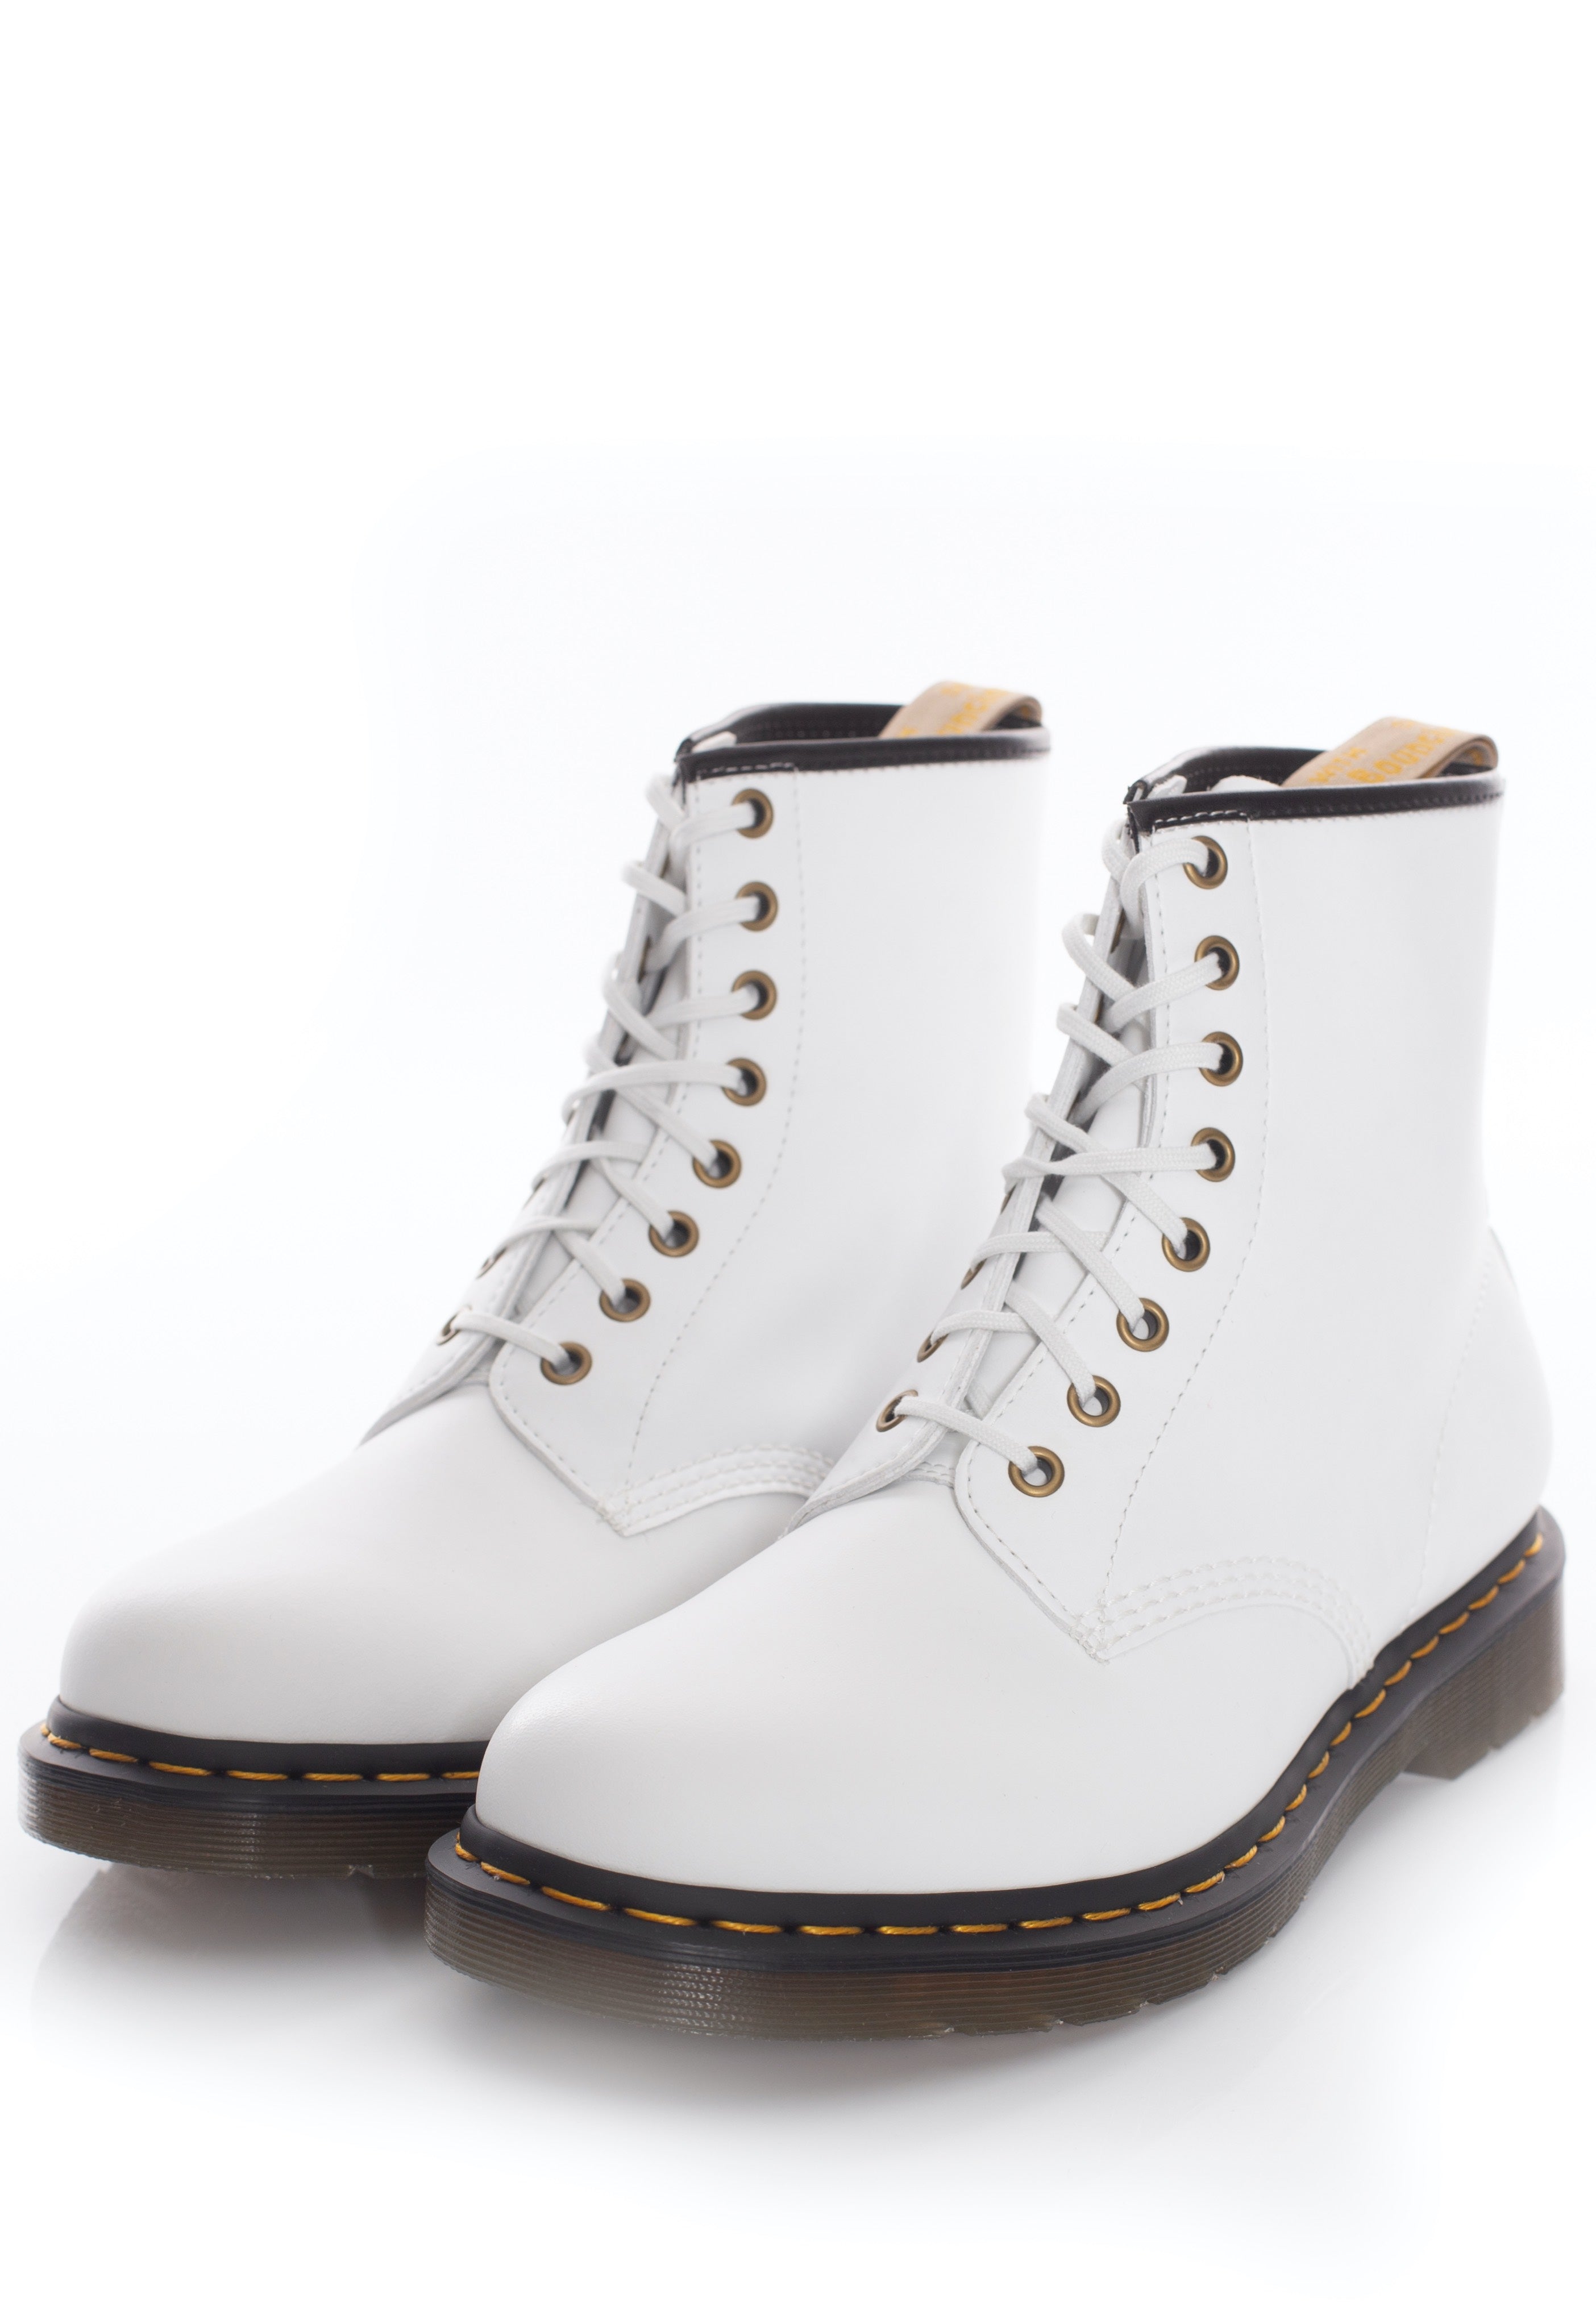 Dr. Martens - Vegan 1460 Optical White Kemble - Shoes